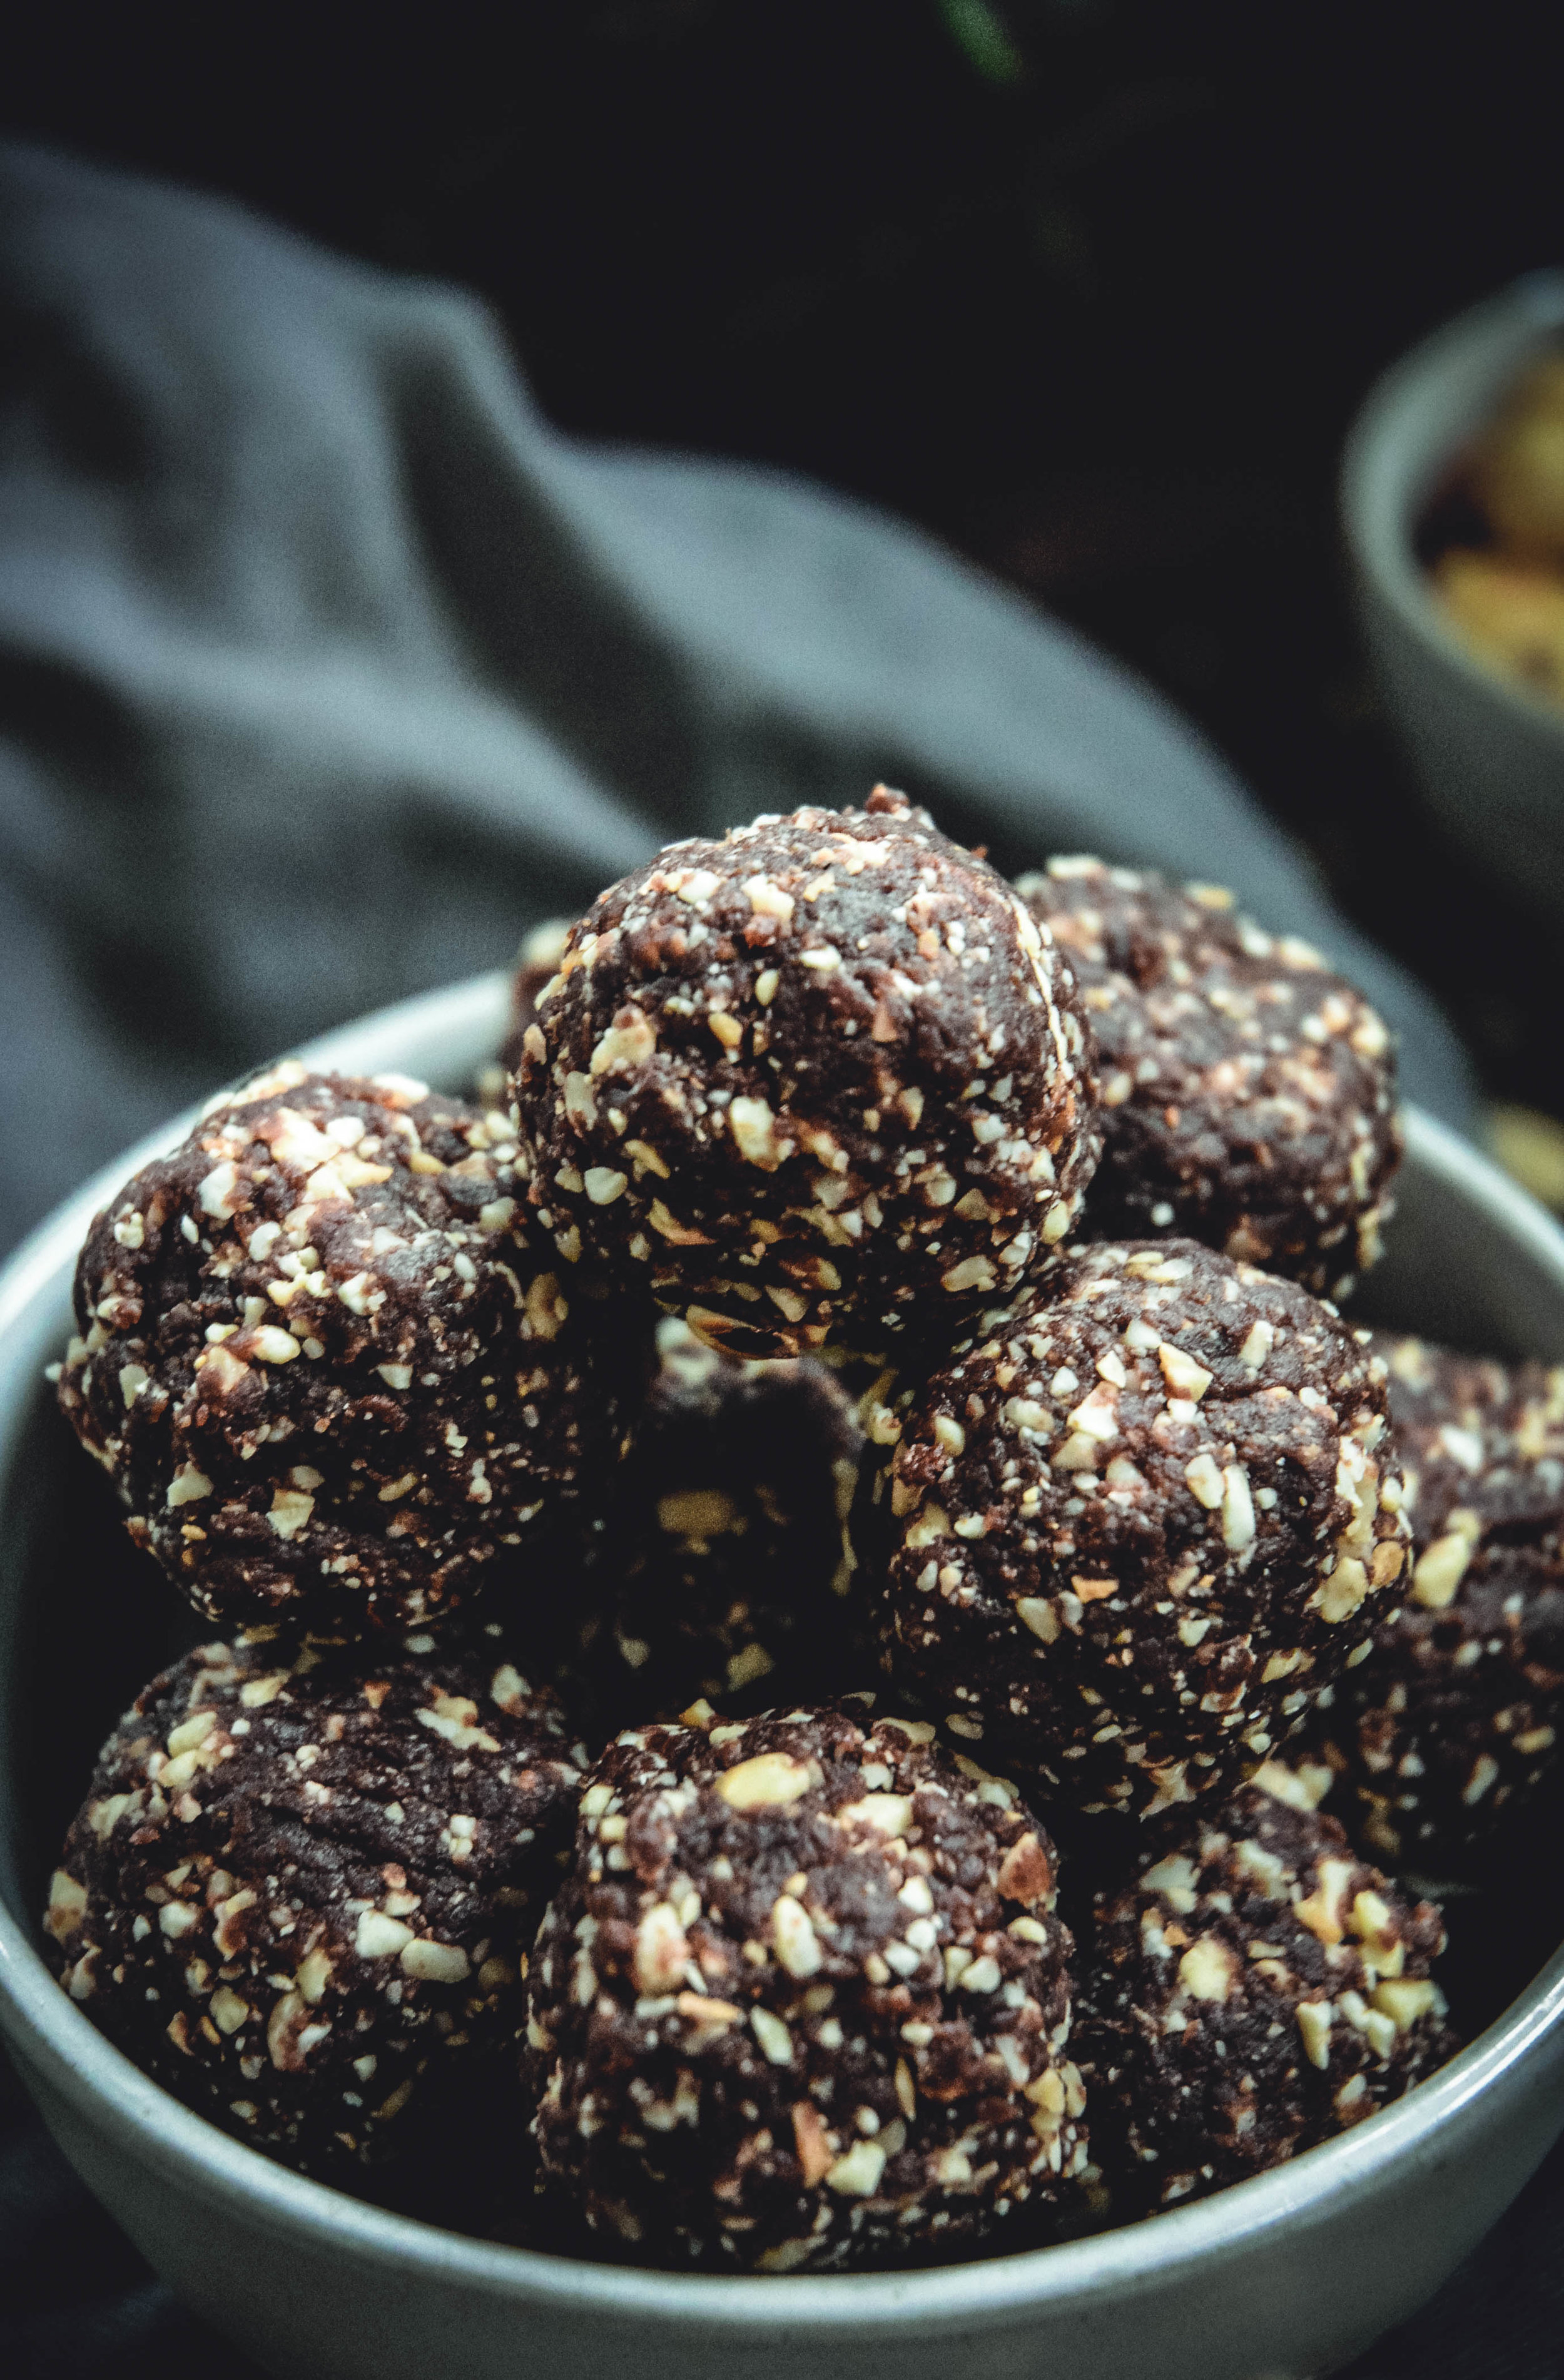  chocolate hazelnut balls in bowl